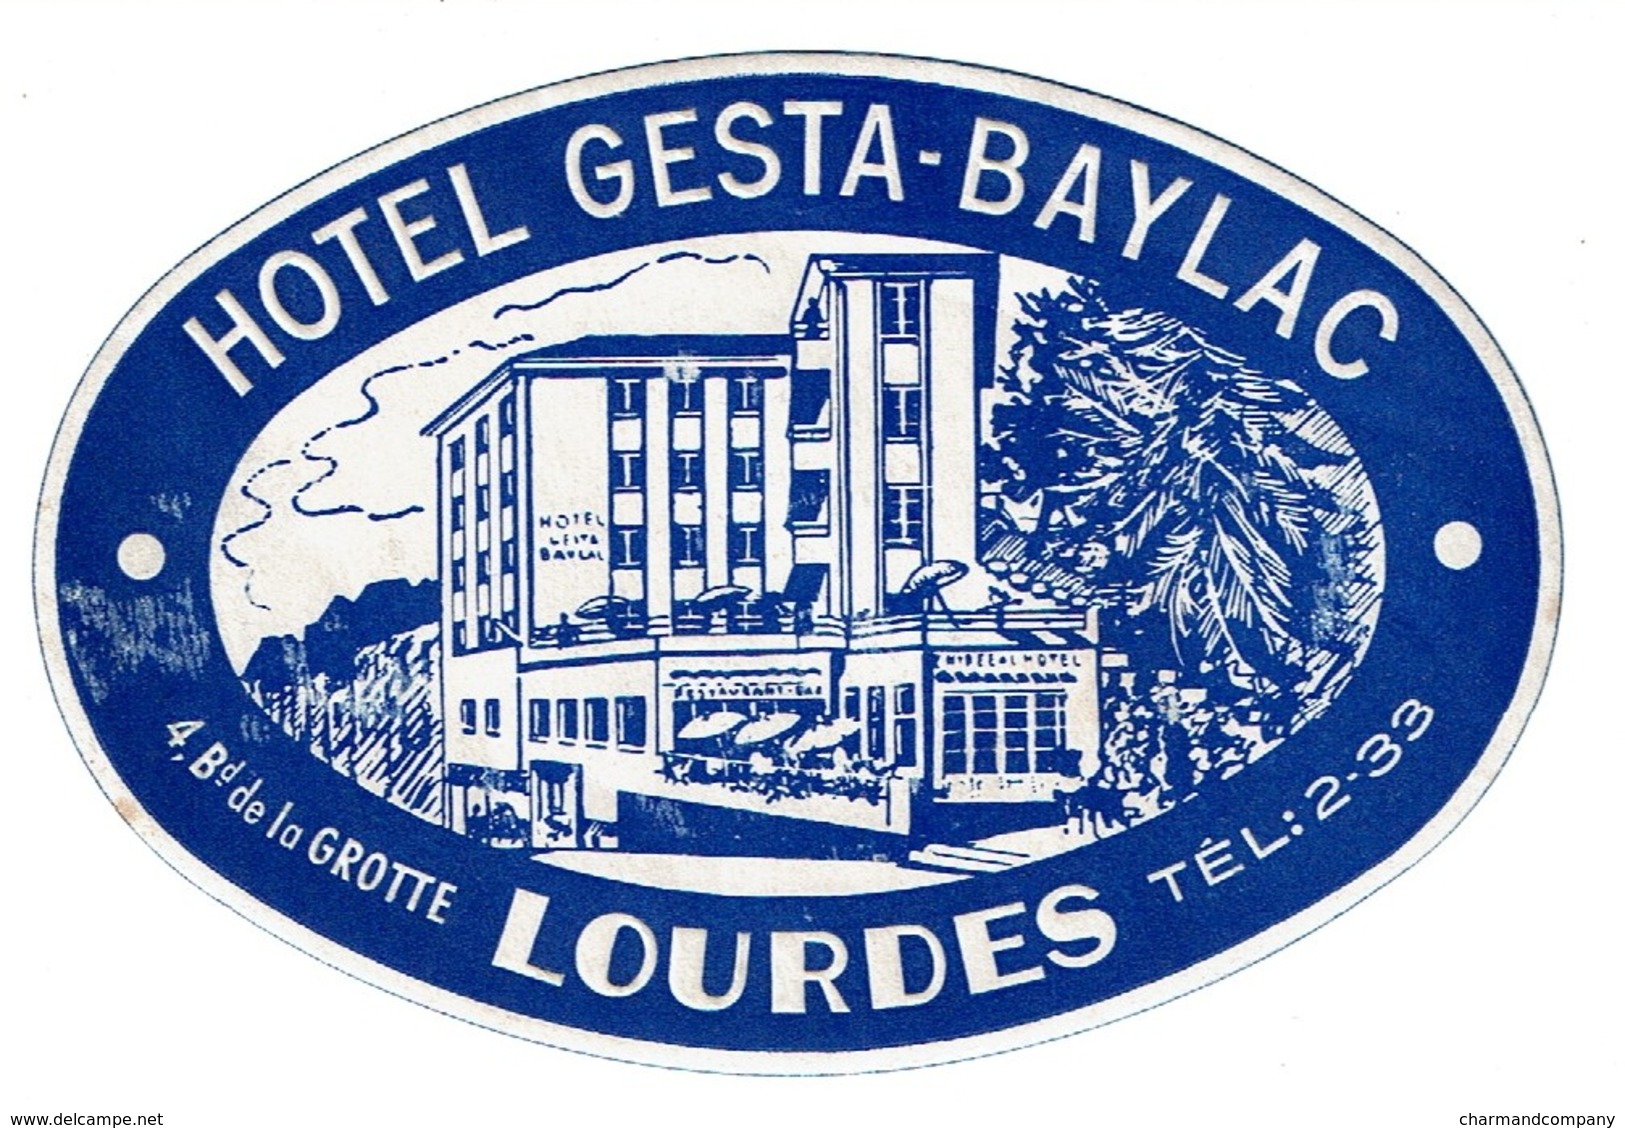 ETIQUETTE D'HOTEL - LABEL - LUGGAGE - FRANCE - Lourdes, Hôtel GESTA-BAYLAC, 4  Bd De La Grotte - 2 Scans - Hotel Labels